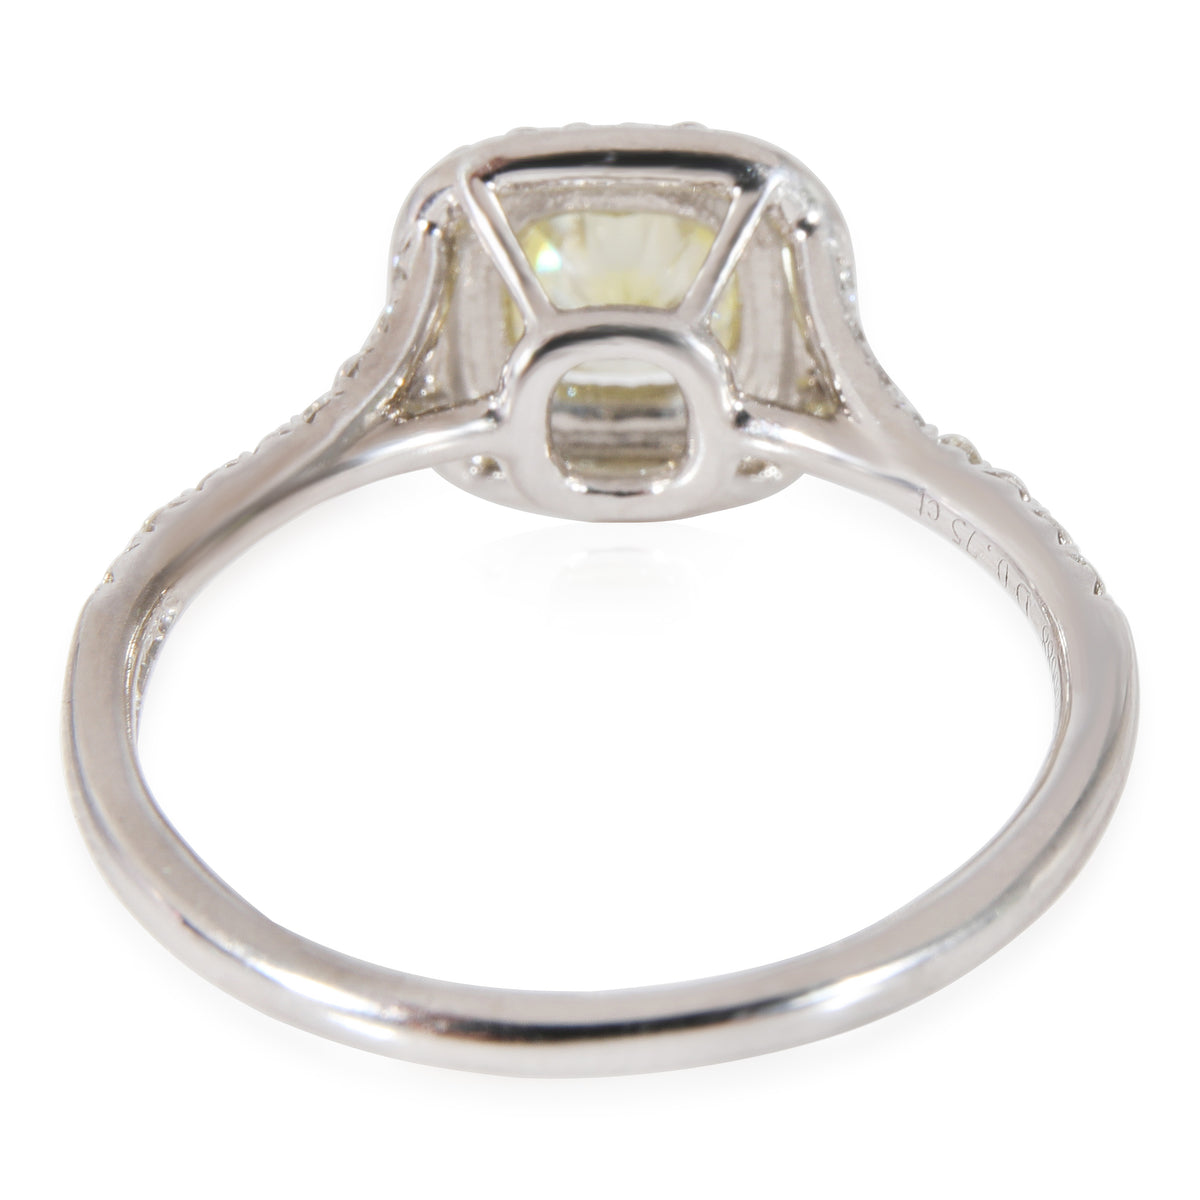 Tiffany & Co. Soleste Halo Diamond Engagement Ring in Platinum & 18K YG 1.03 CTW